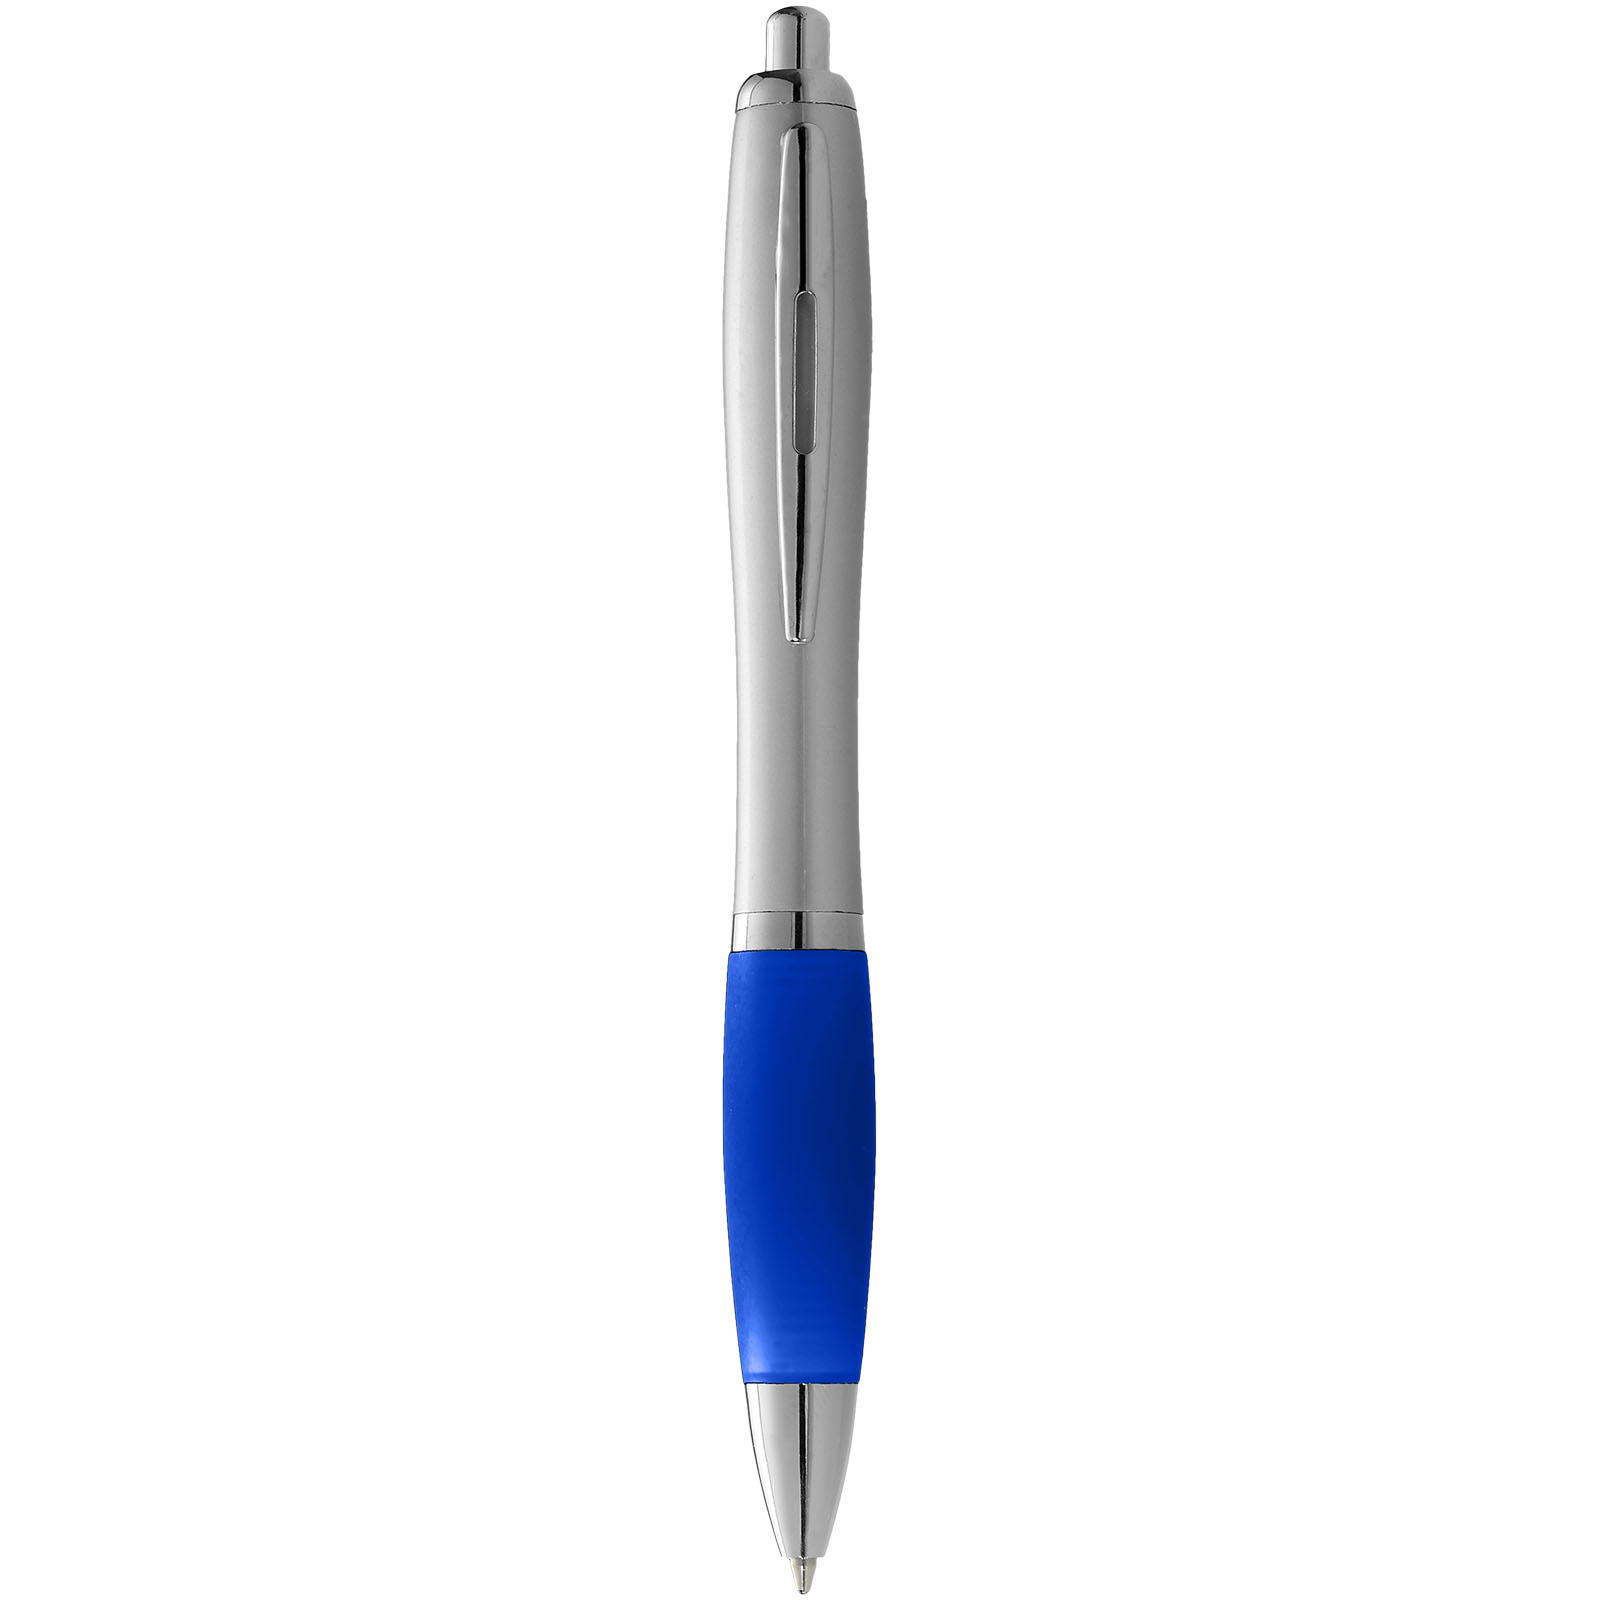 Advertising Ballpoint Pens - Nash ballpoint pen with silver barrel and coloured grip